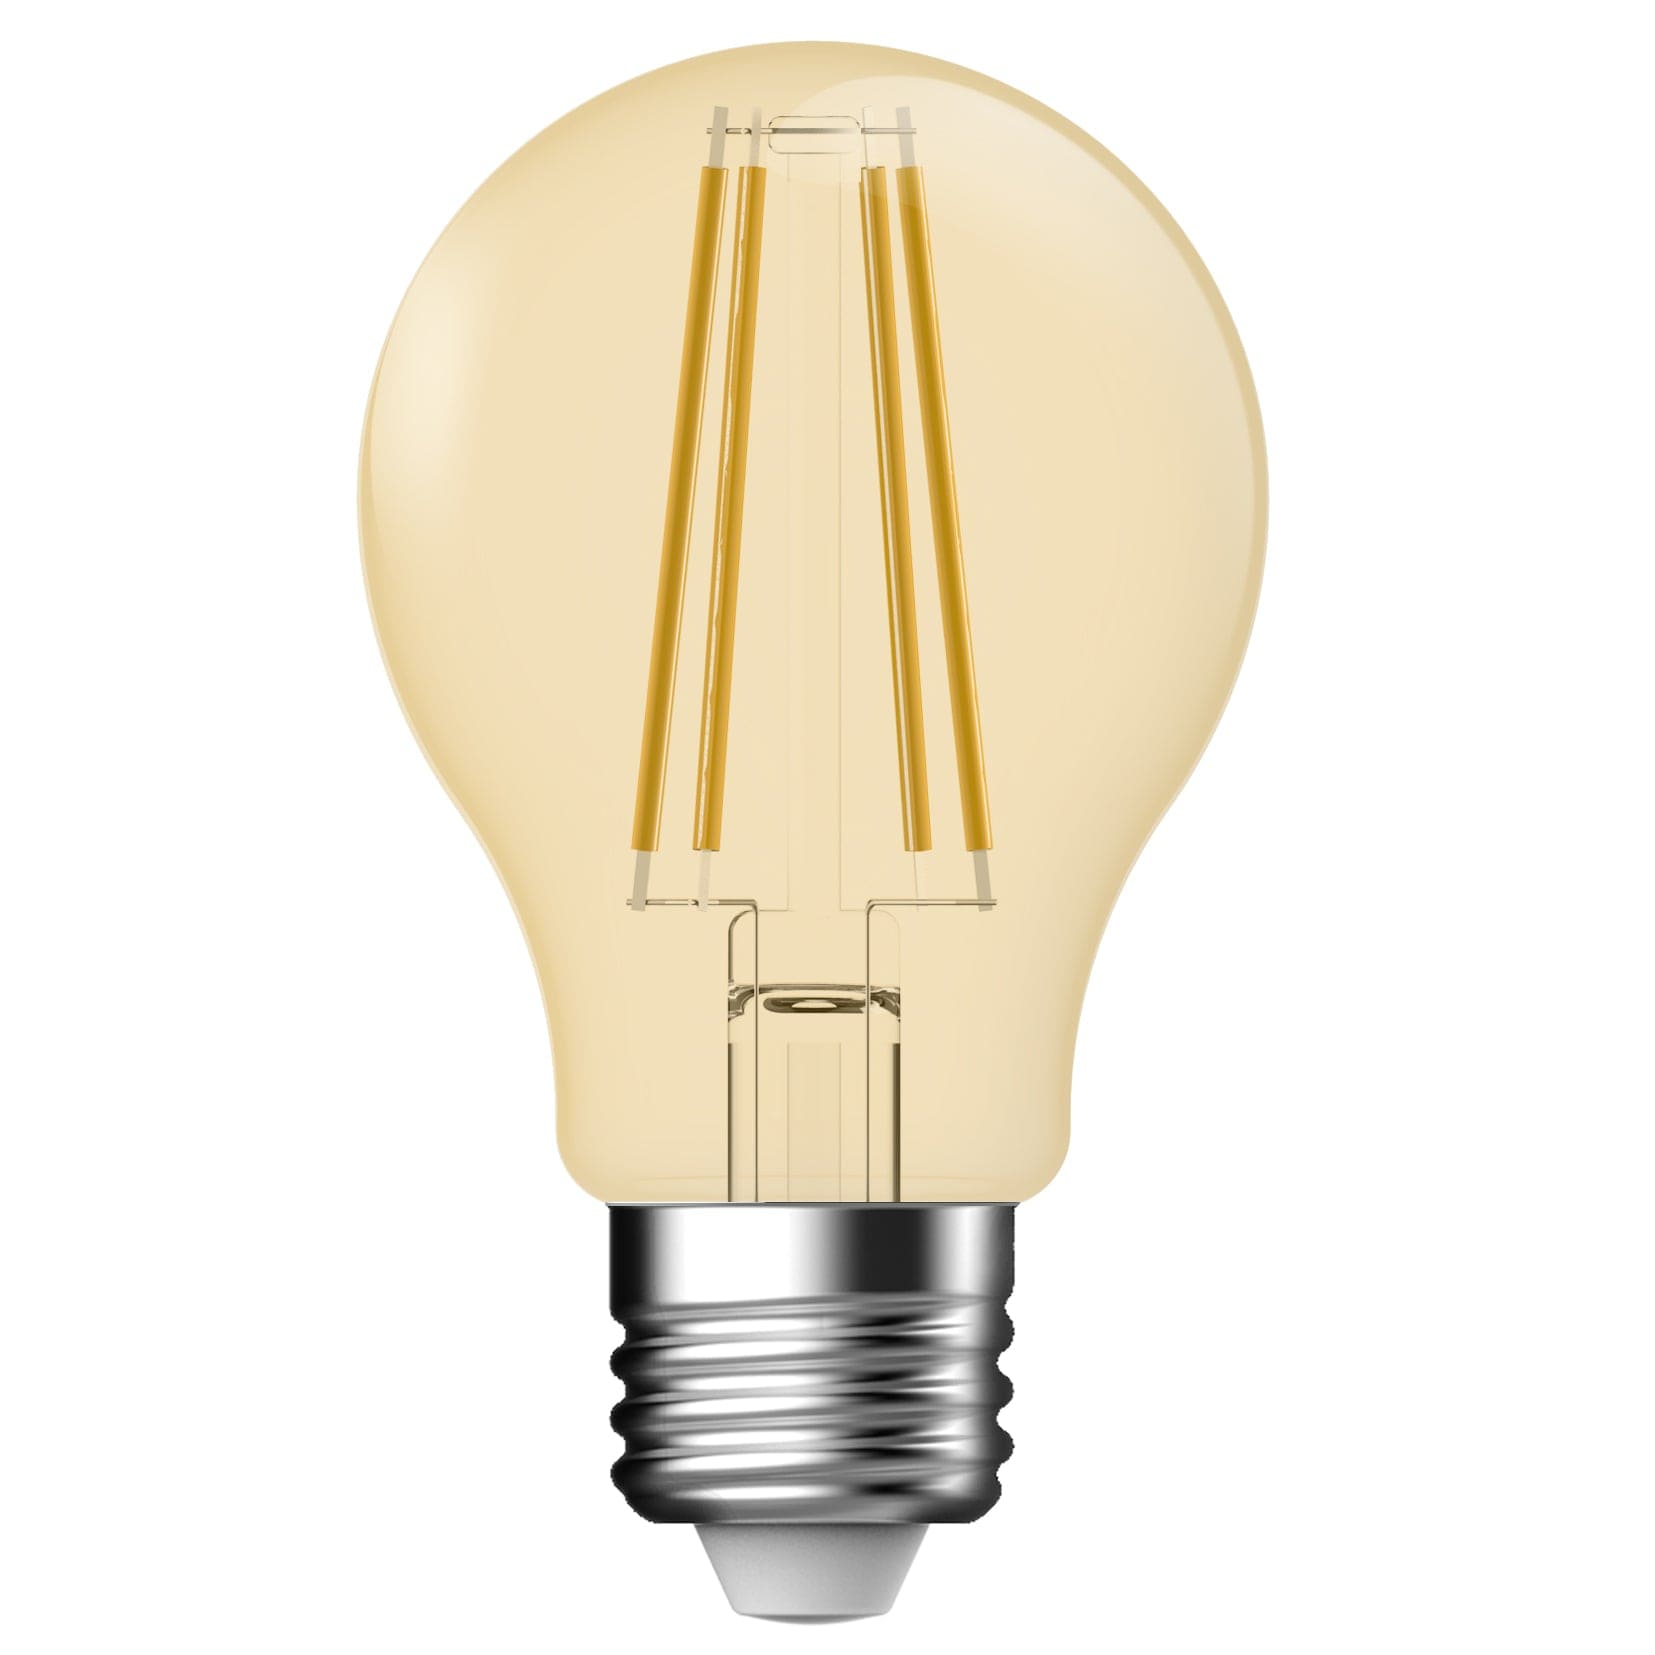 Heavenly Chandeliers Light Bulbs Decorative E27 A60 Dimmable Light Bulb, warm golden glow